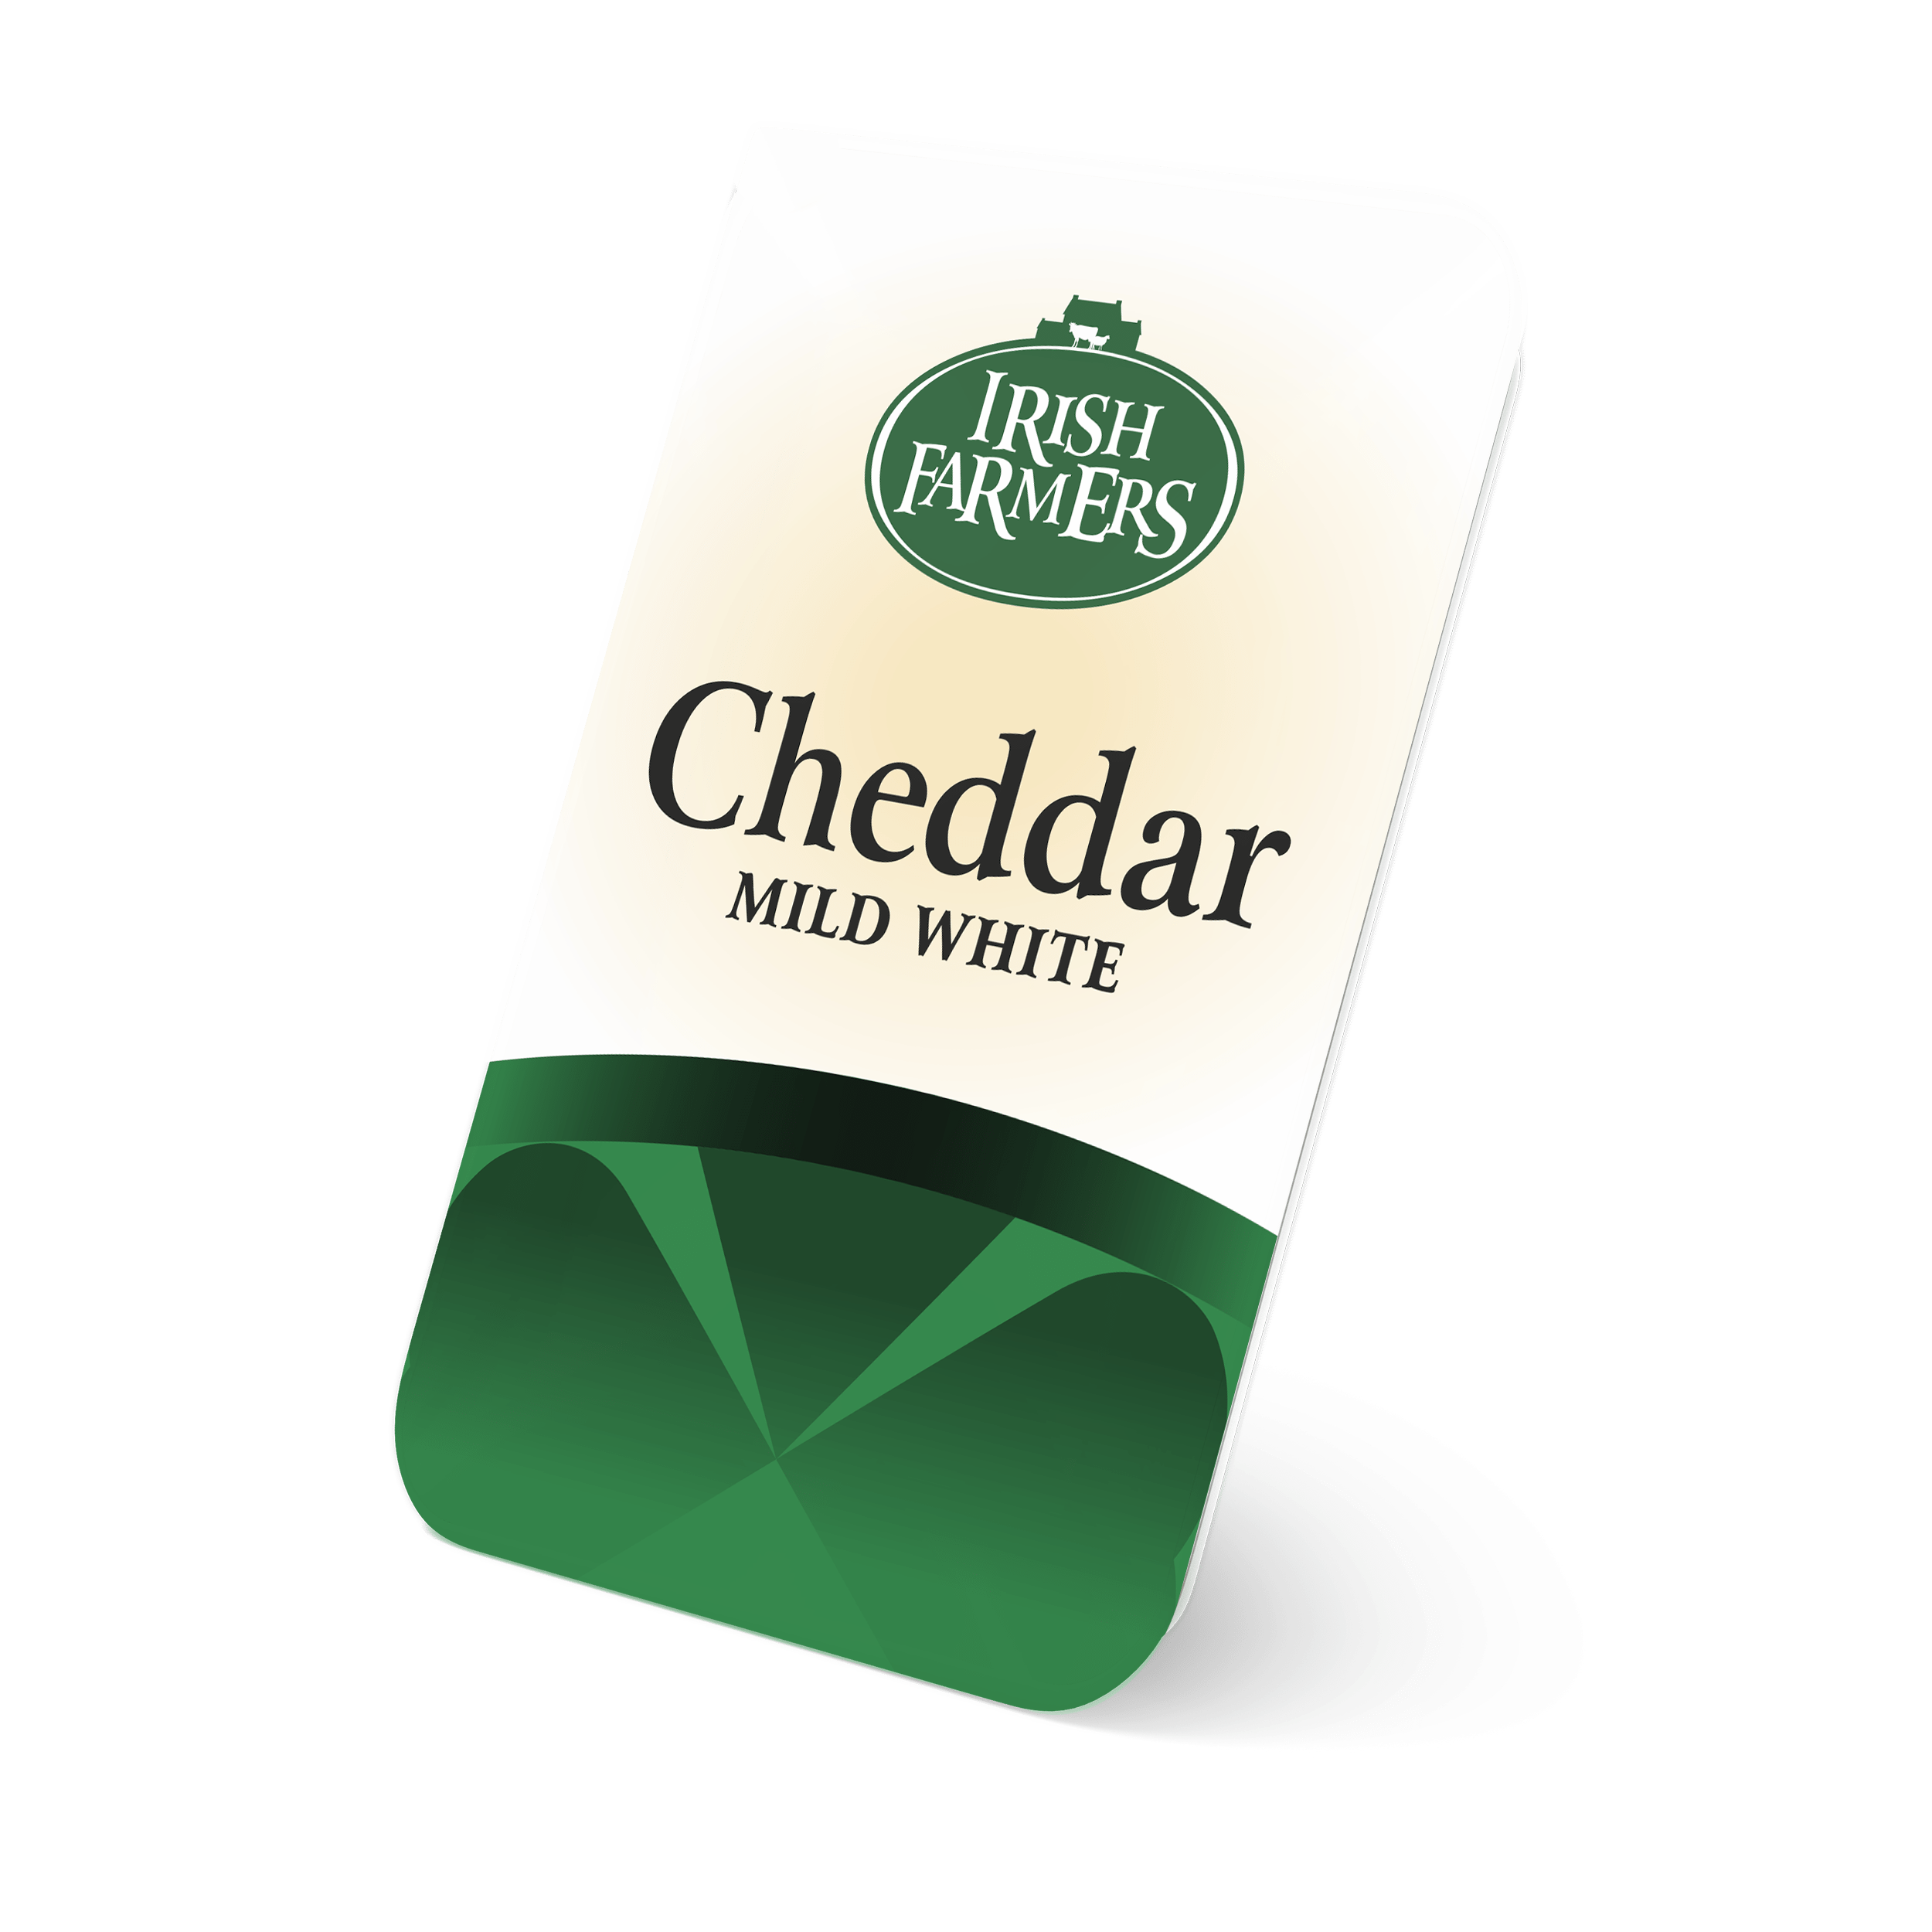 CHEDDAR MILD WHITE CHEESE (slices)